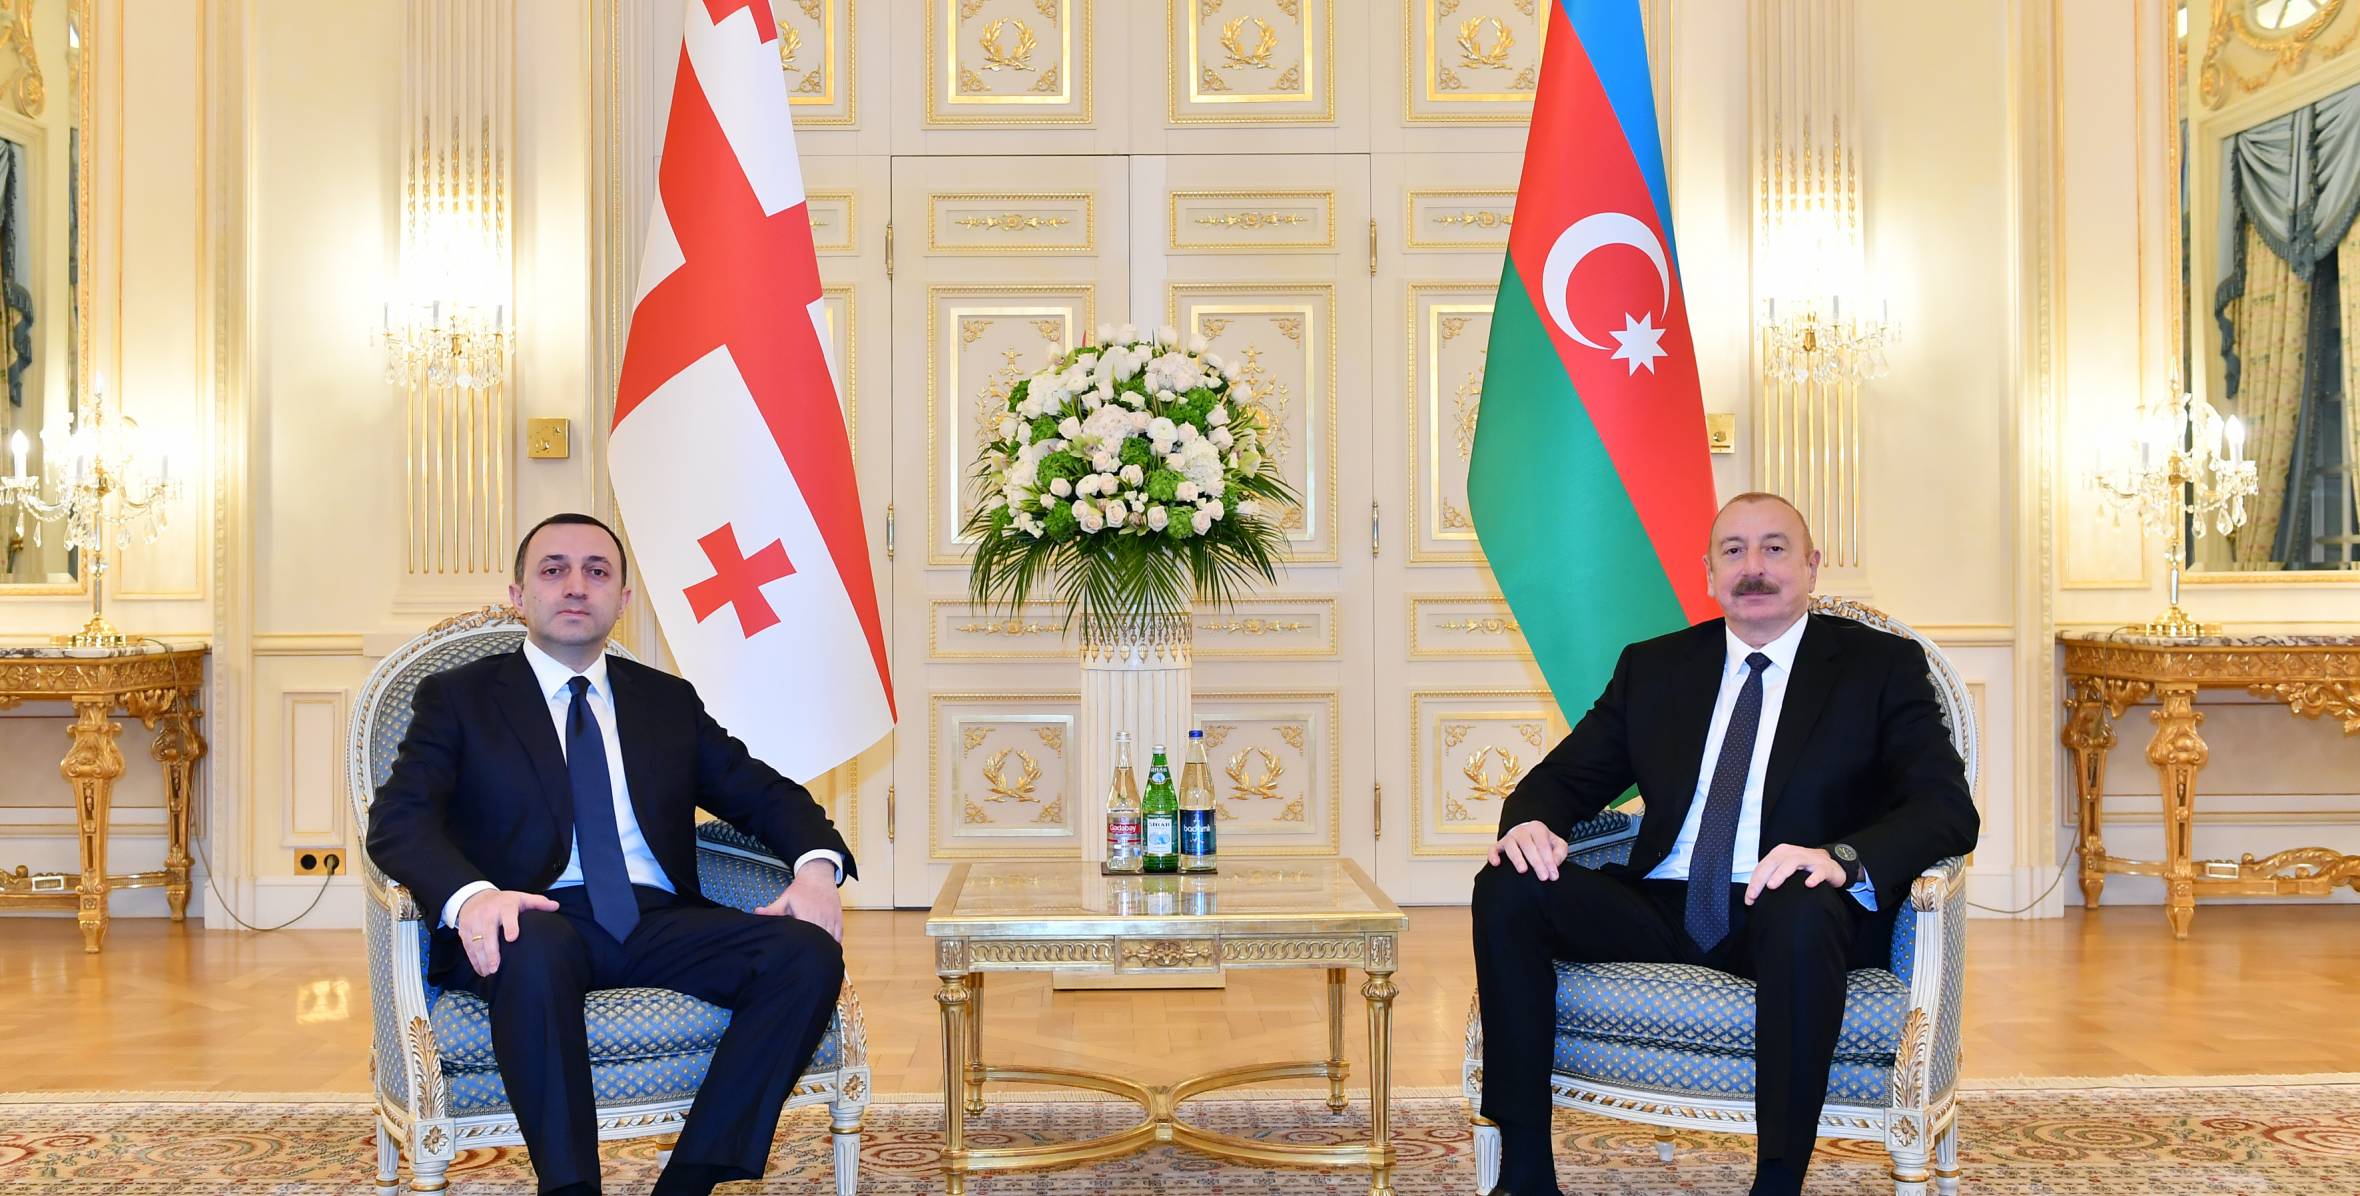 Ilham Aliyev met with Prime Minister of Georgia Irakli Garibashvili